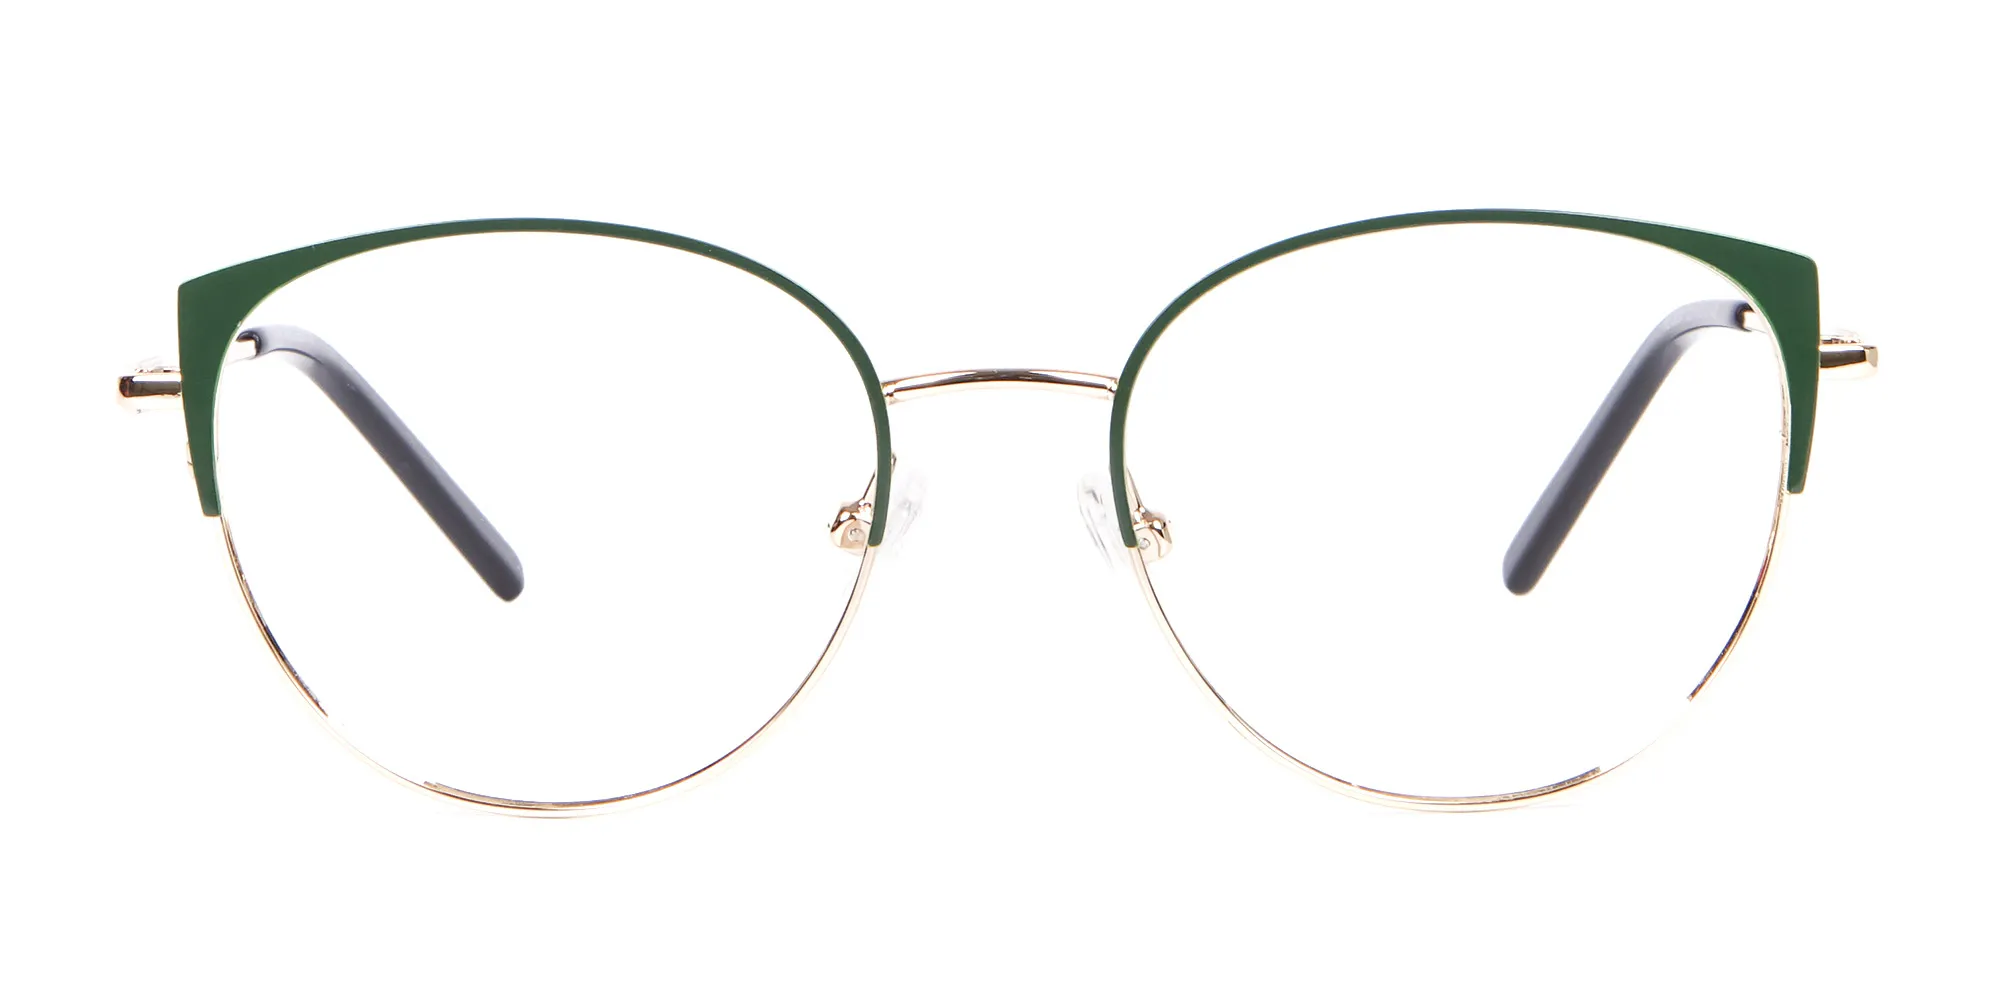 Vintage Inspired Glasses Green and Metal Frame - 2